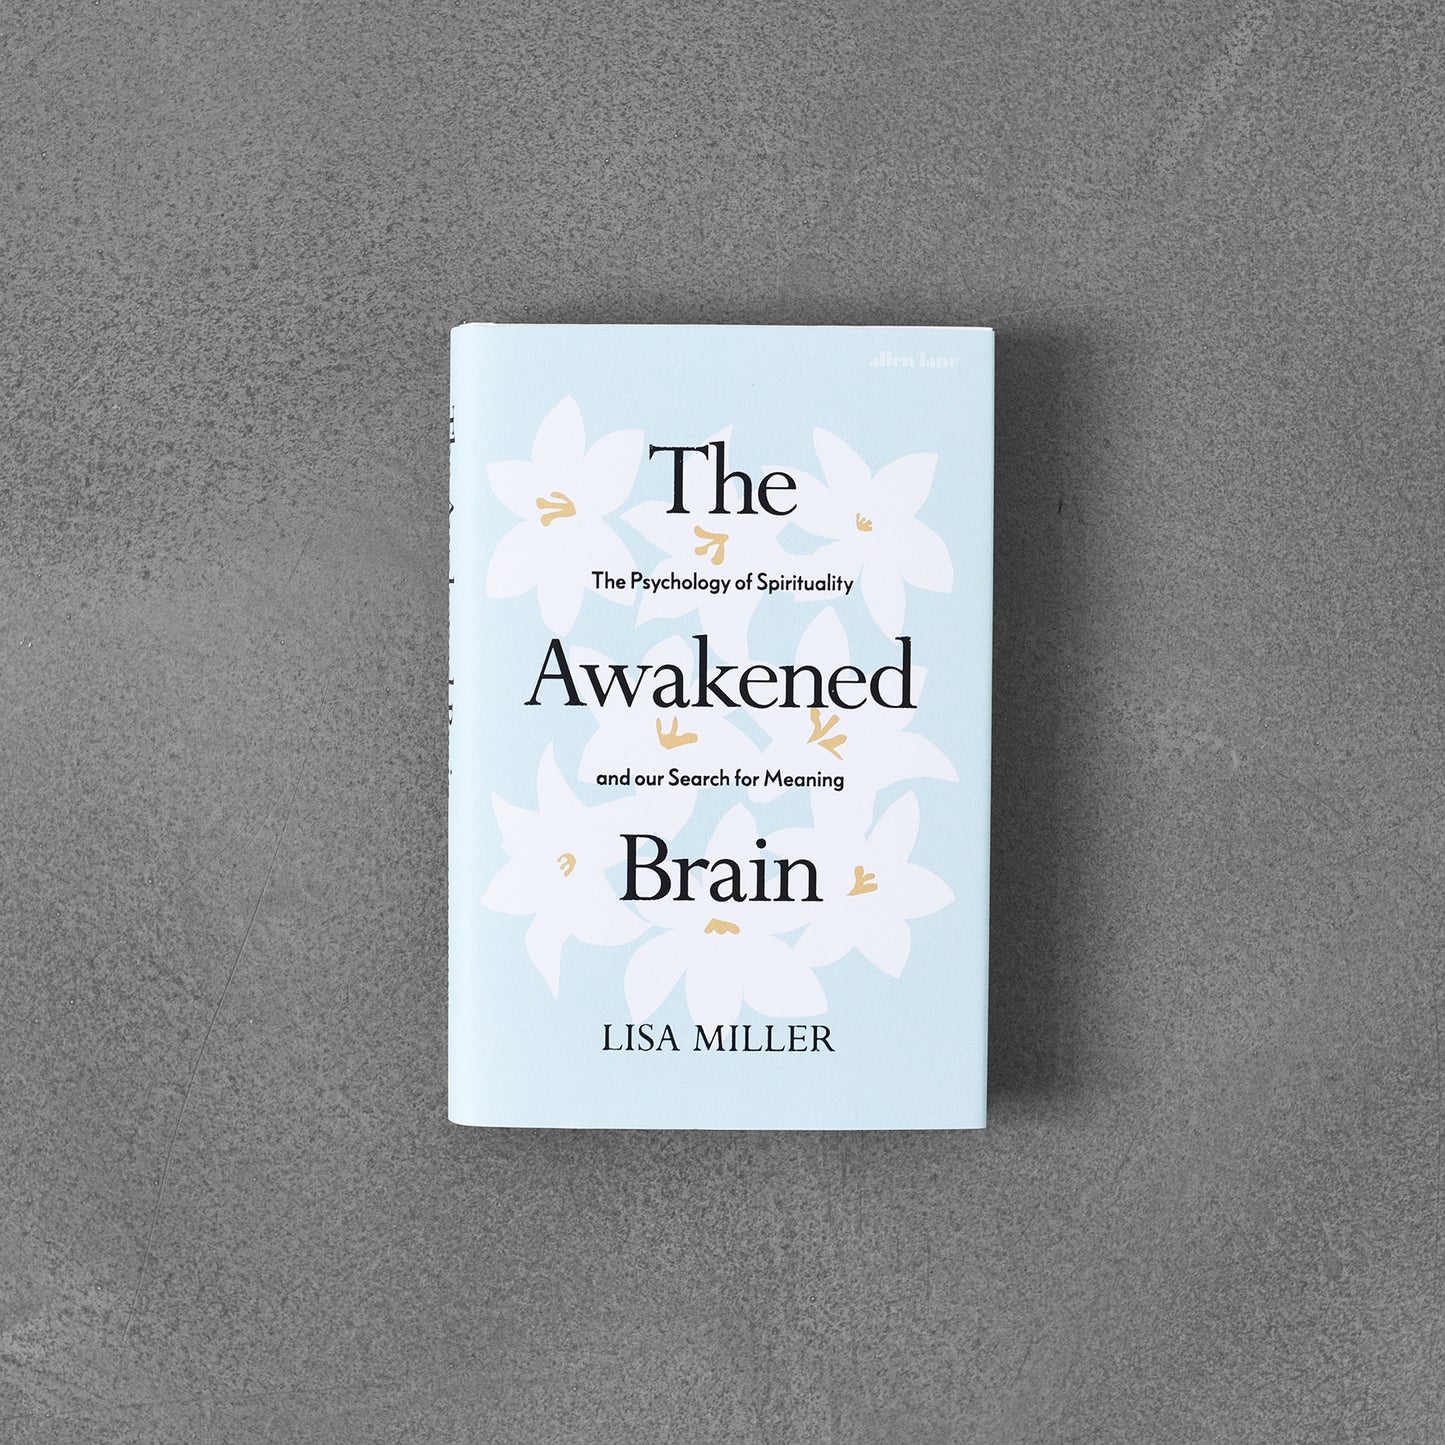 Awakened Brain : The Psychology of Spirituality...Lisa Miller HB